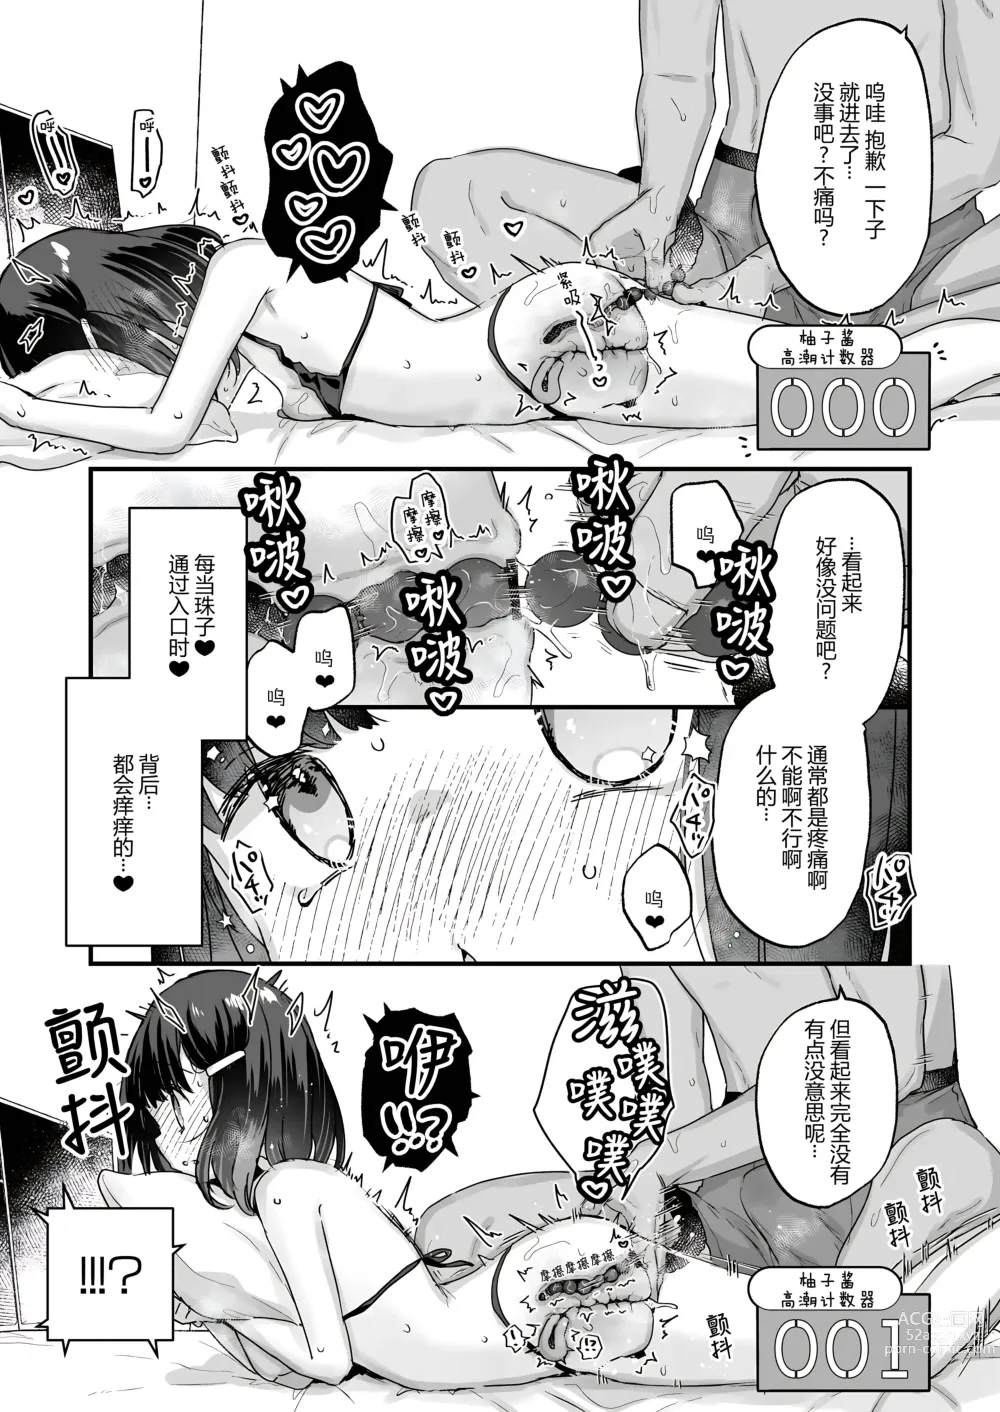 Page 14 of doujinshi 不恩爱亲热做爱100回高潮就出不去的房间